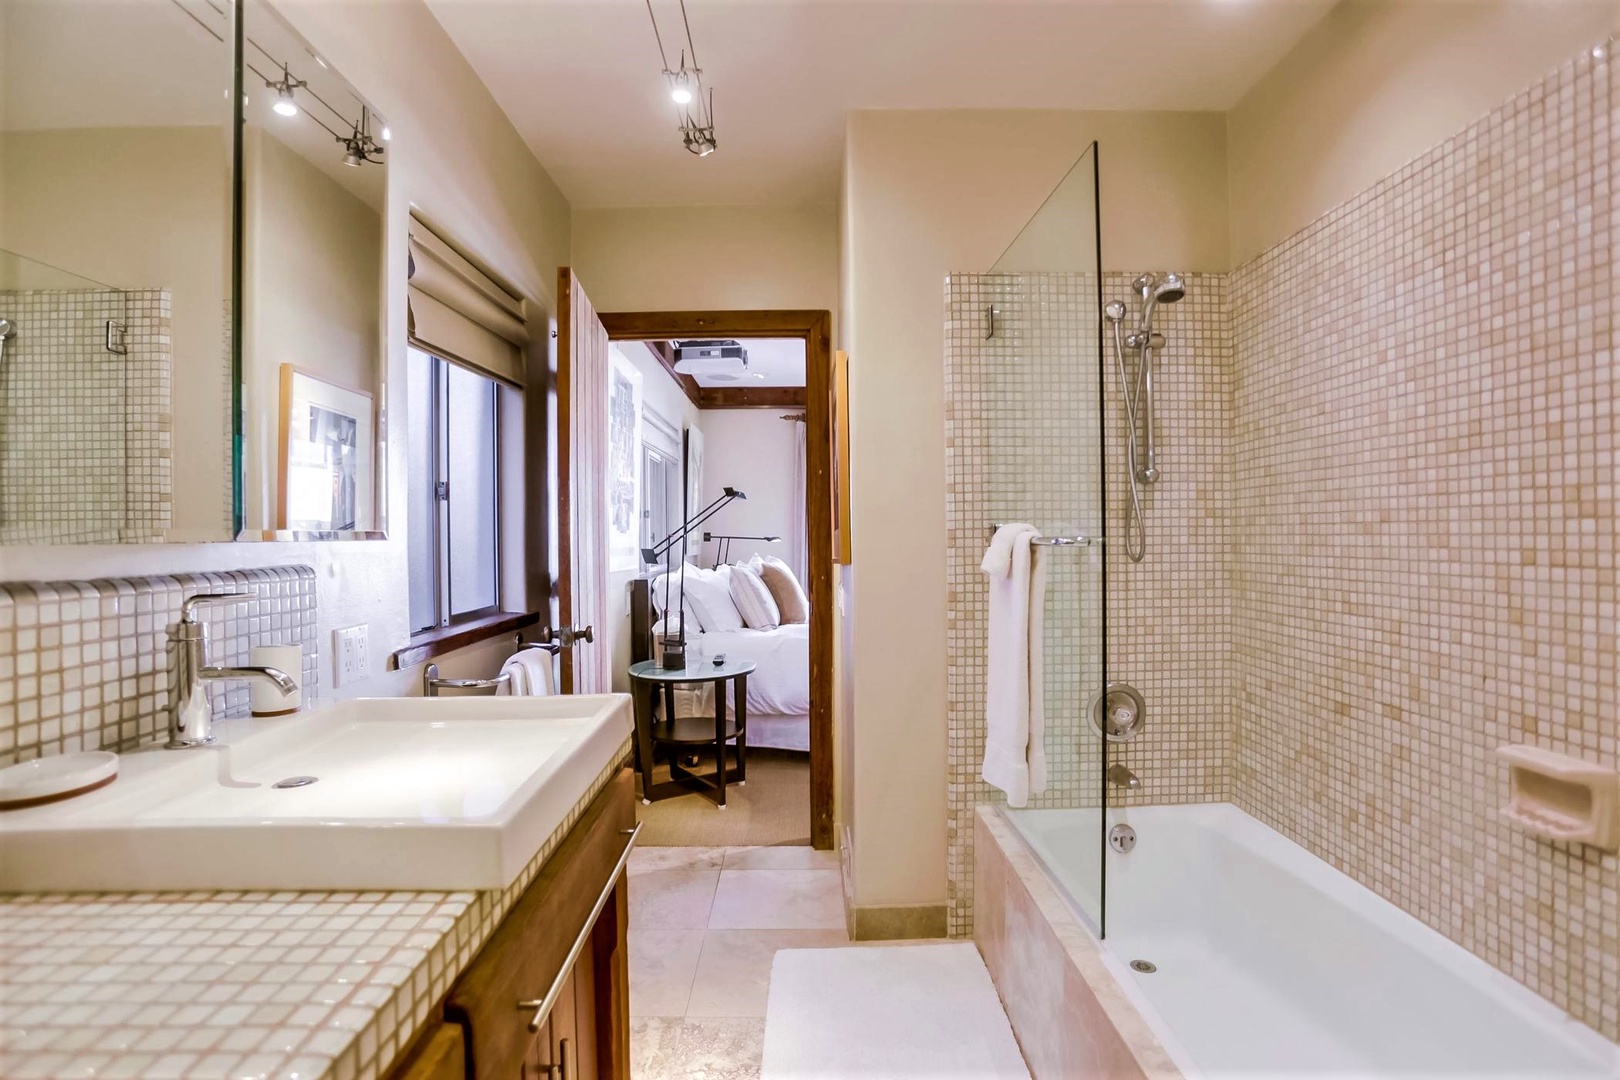 En suite bathroom with tub & shower